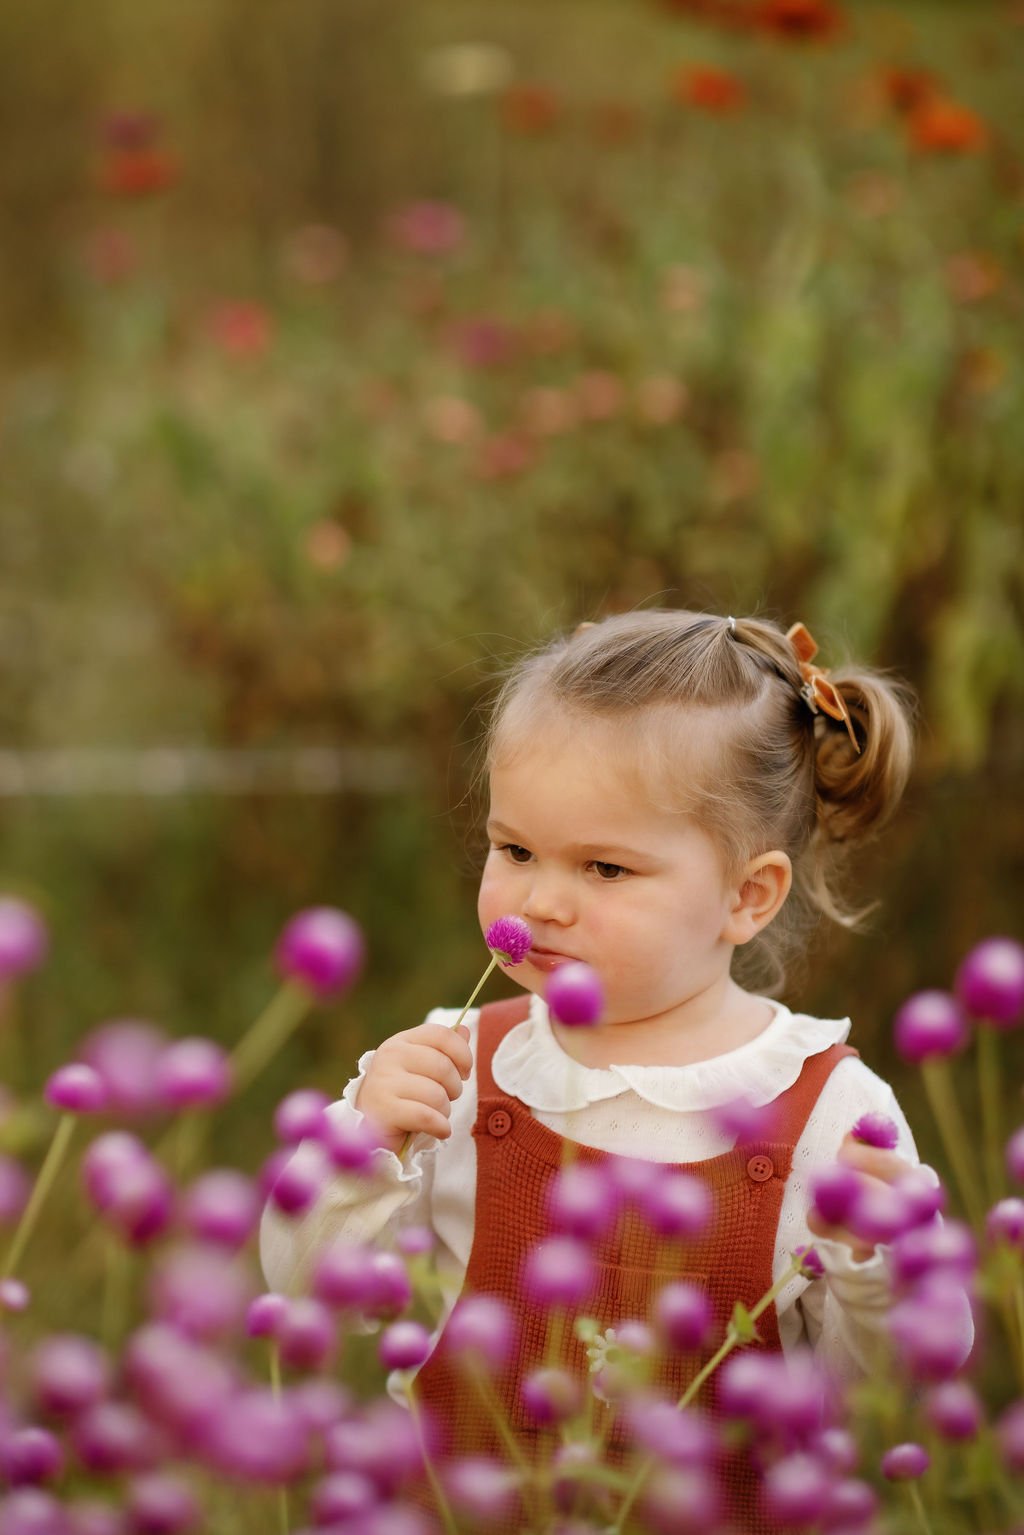 gatlinburg-photographers-widflower-photos-with-gatlinburg-photographer-young-girl-smelling-flowers